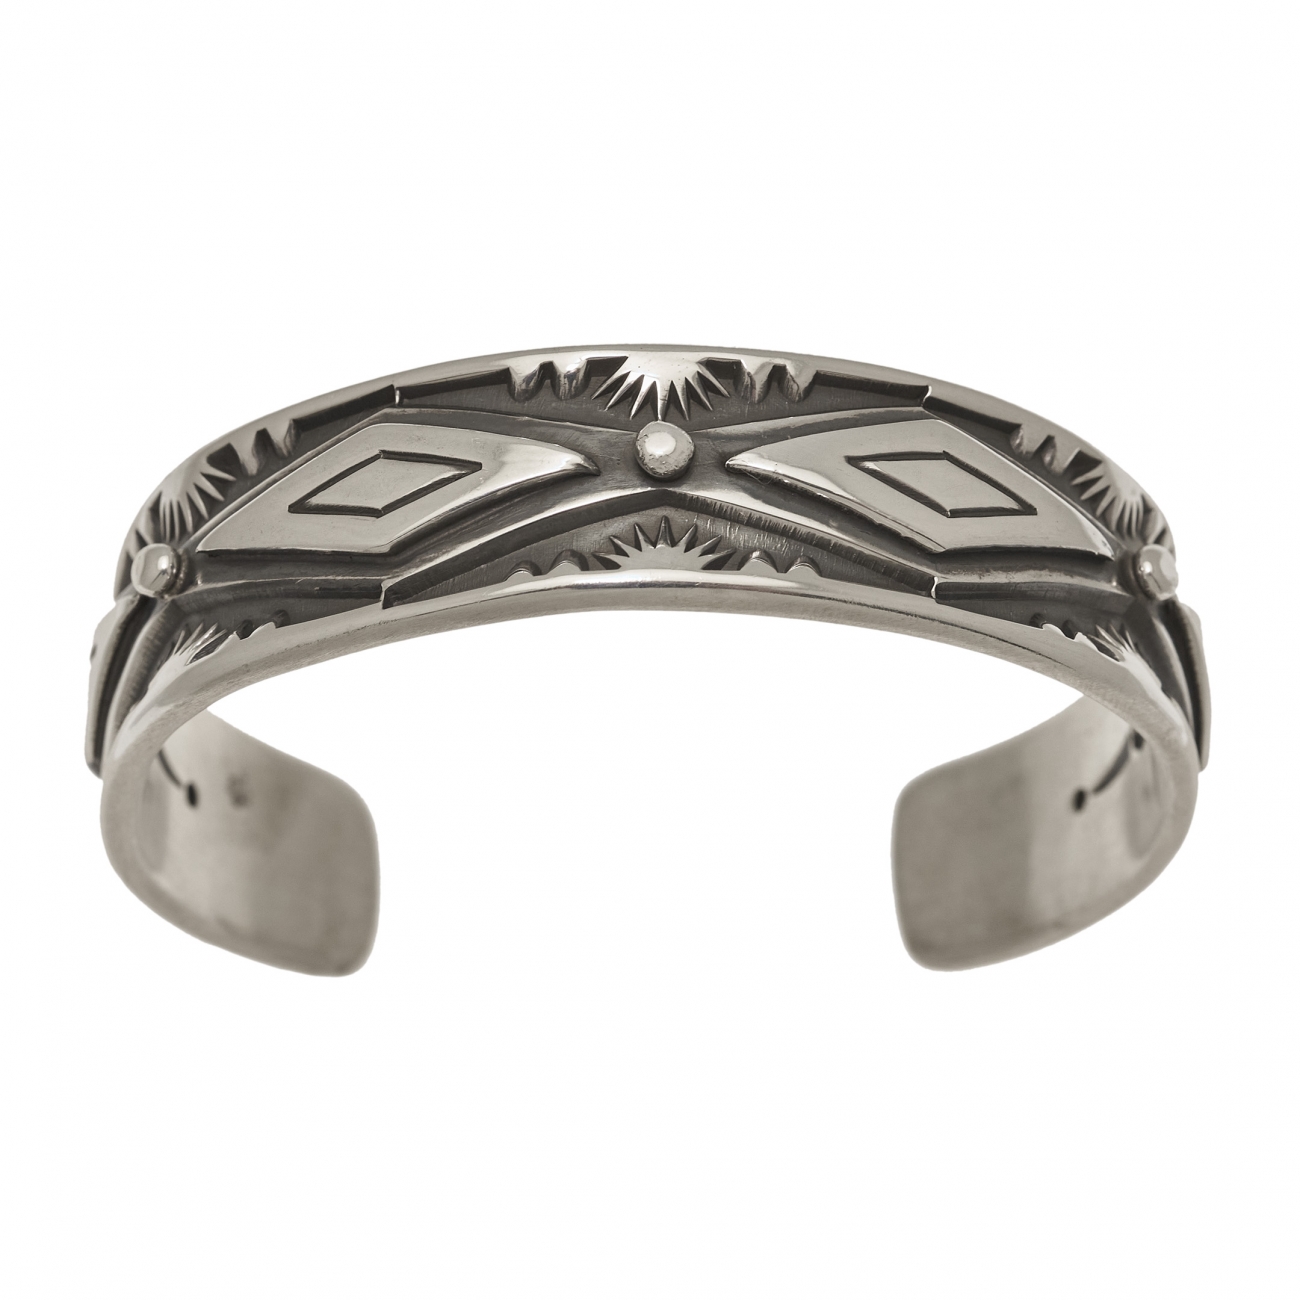 BR800 silver bracelet for men - Harpo Paris